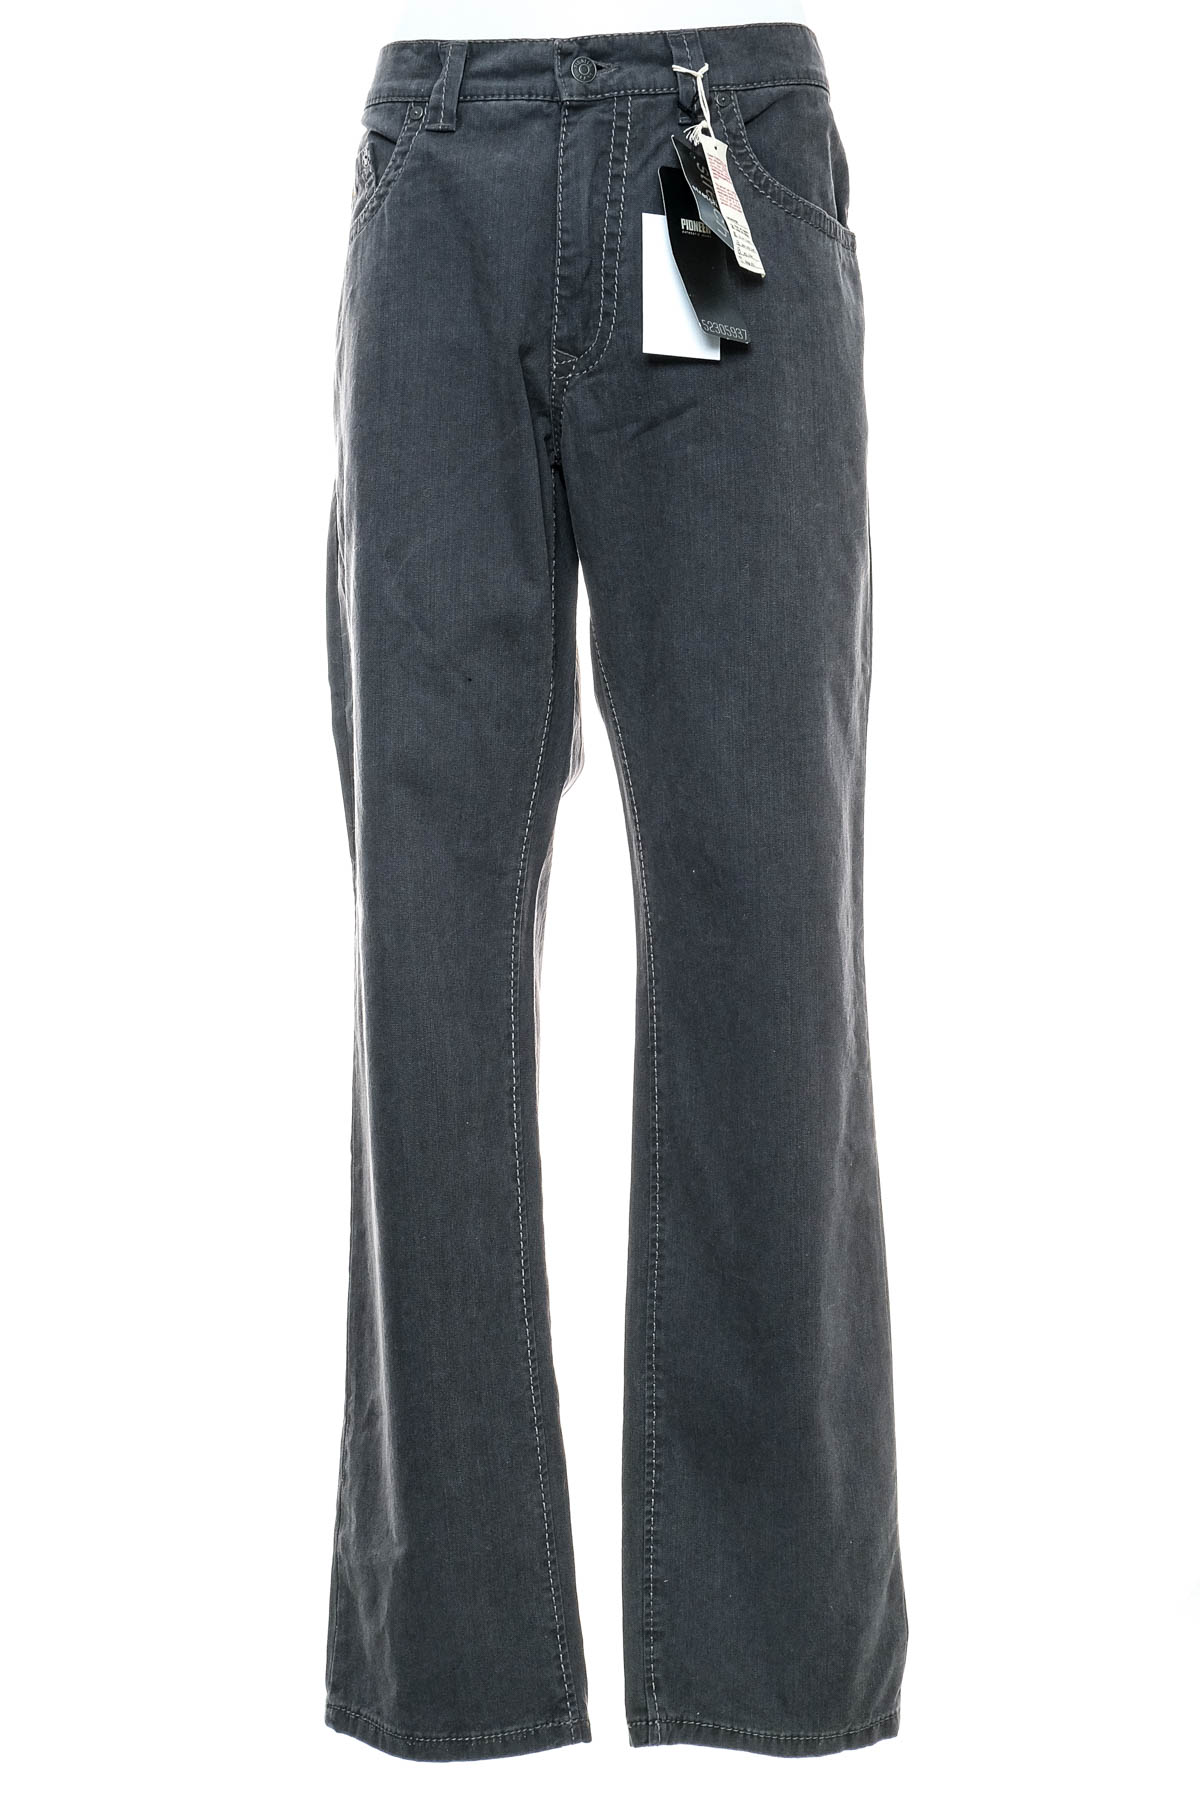 Men's jeans - Pioneer - 0